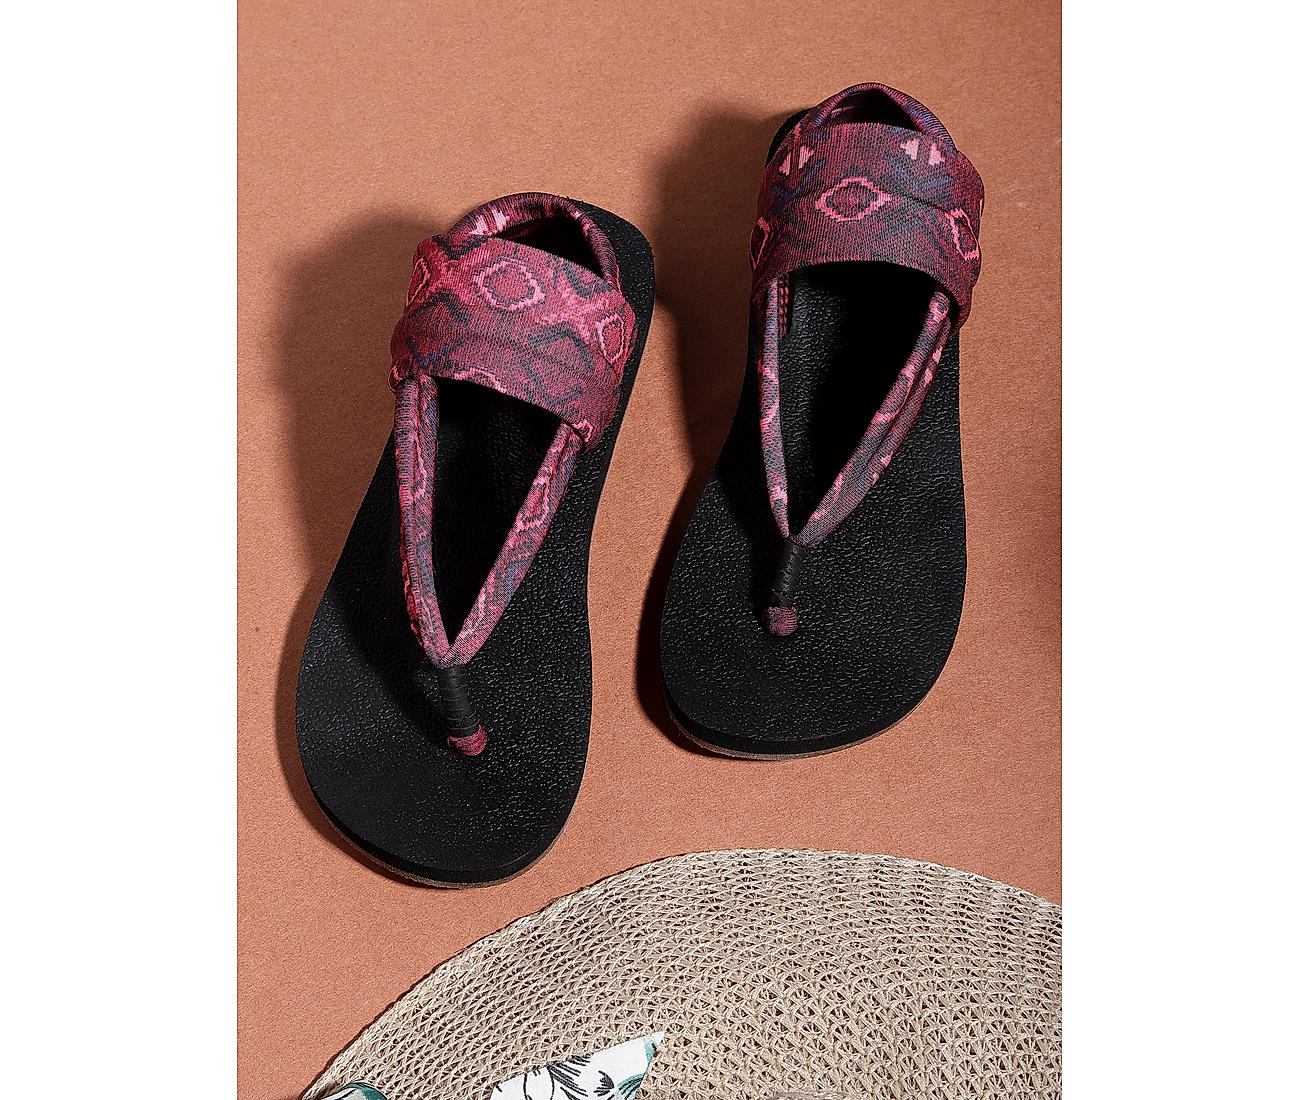 Buy SOLETHREADS Yoga Sling Brown Printed Women Sandals online